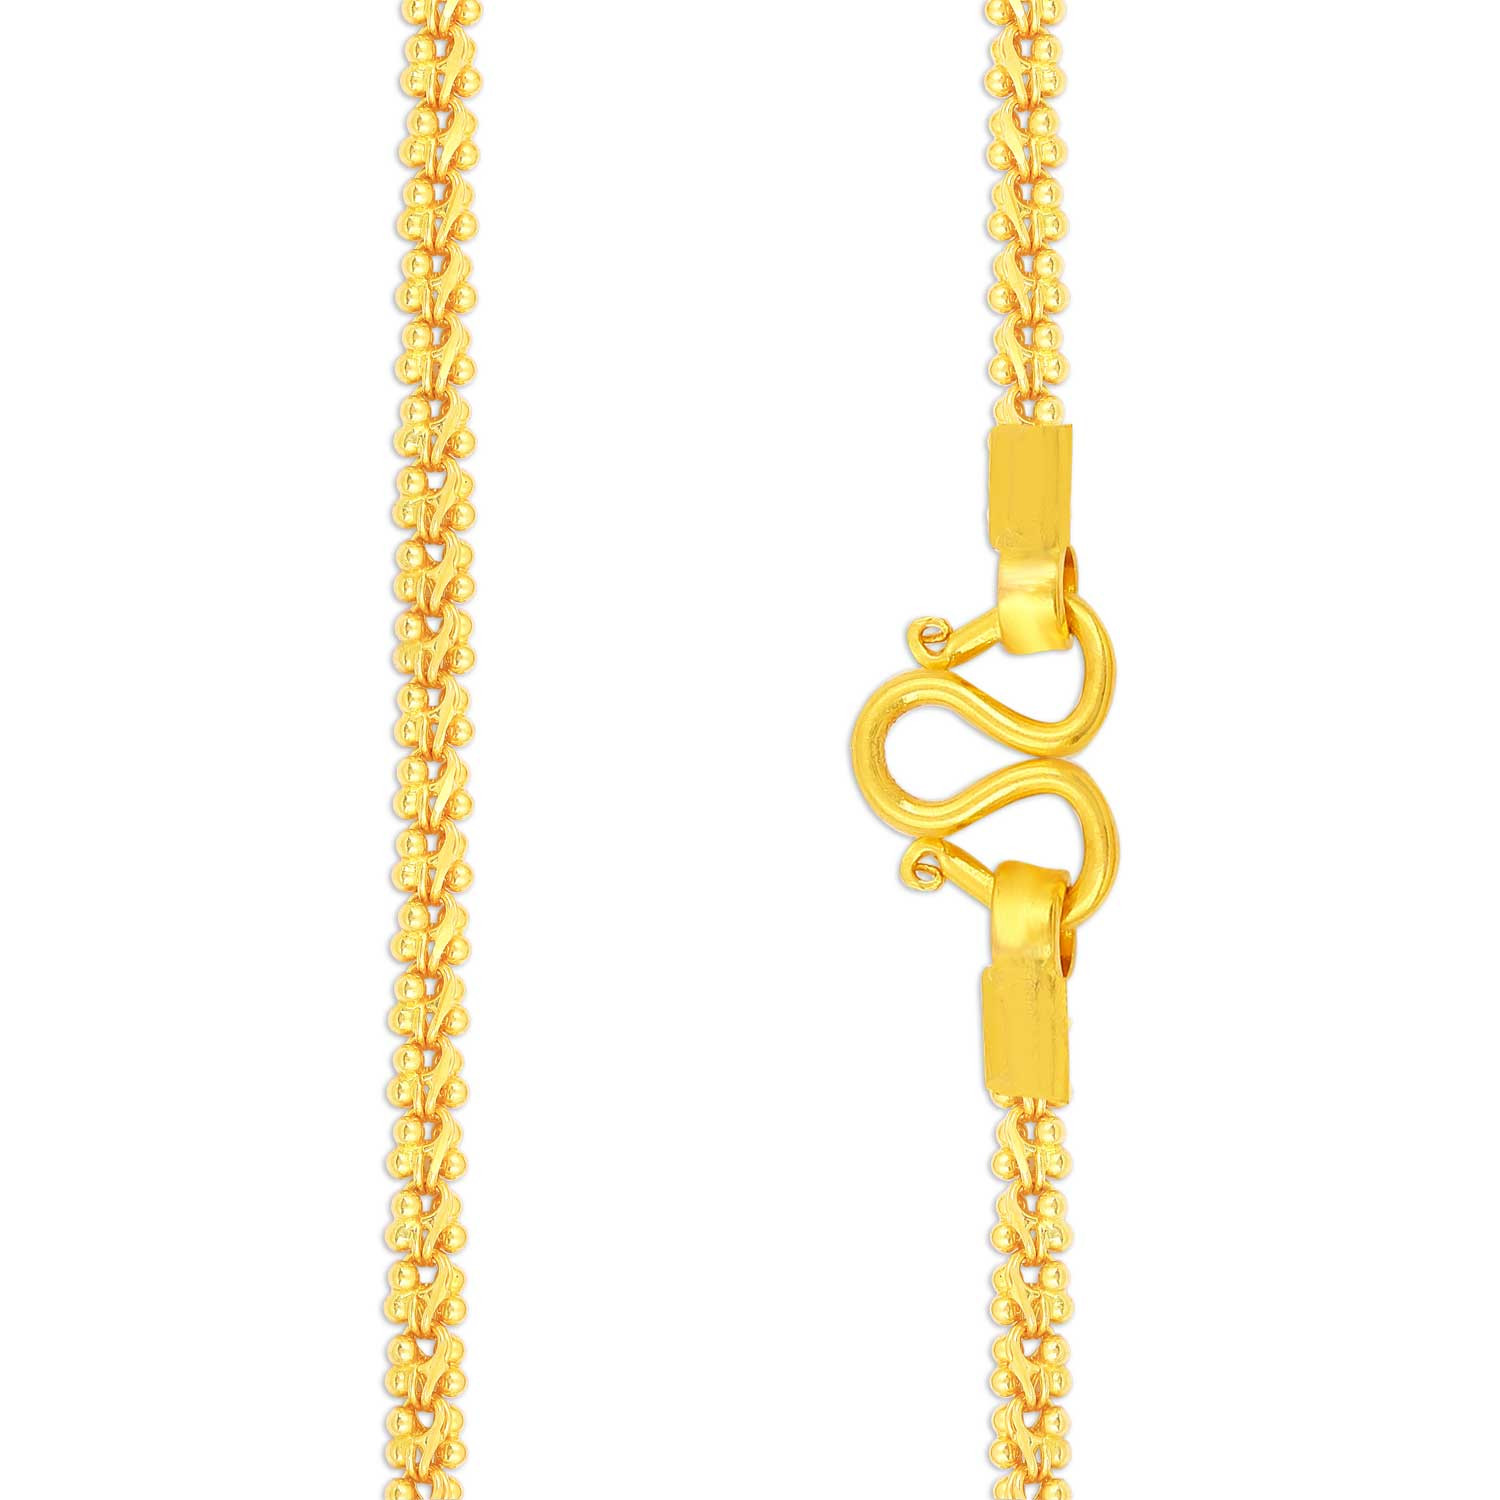 Malabar 22 KT Gold Handcrafted Chain CHTNHMA085